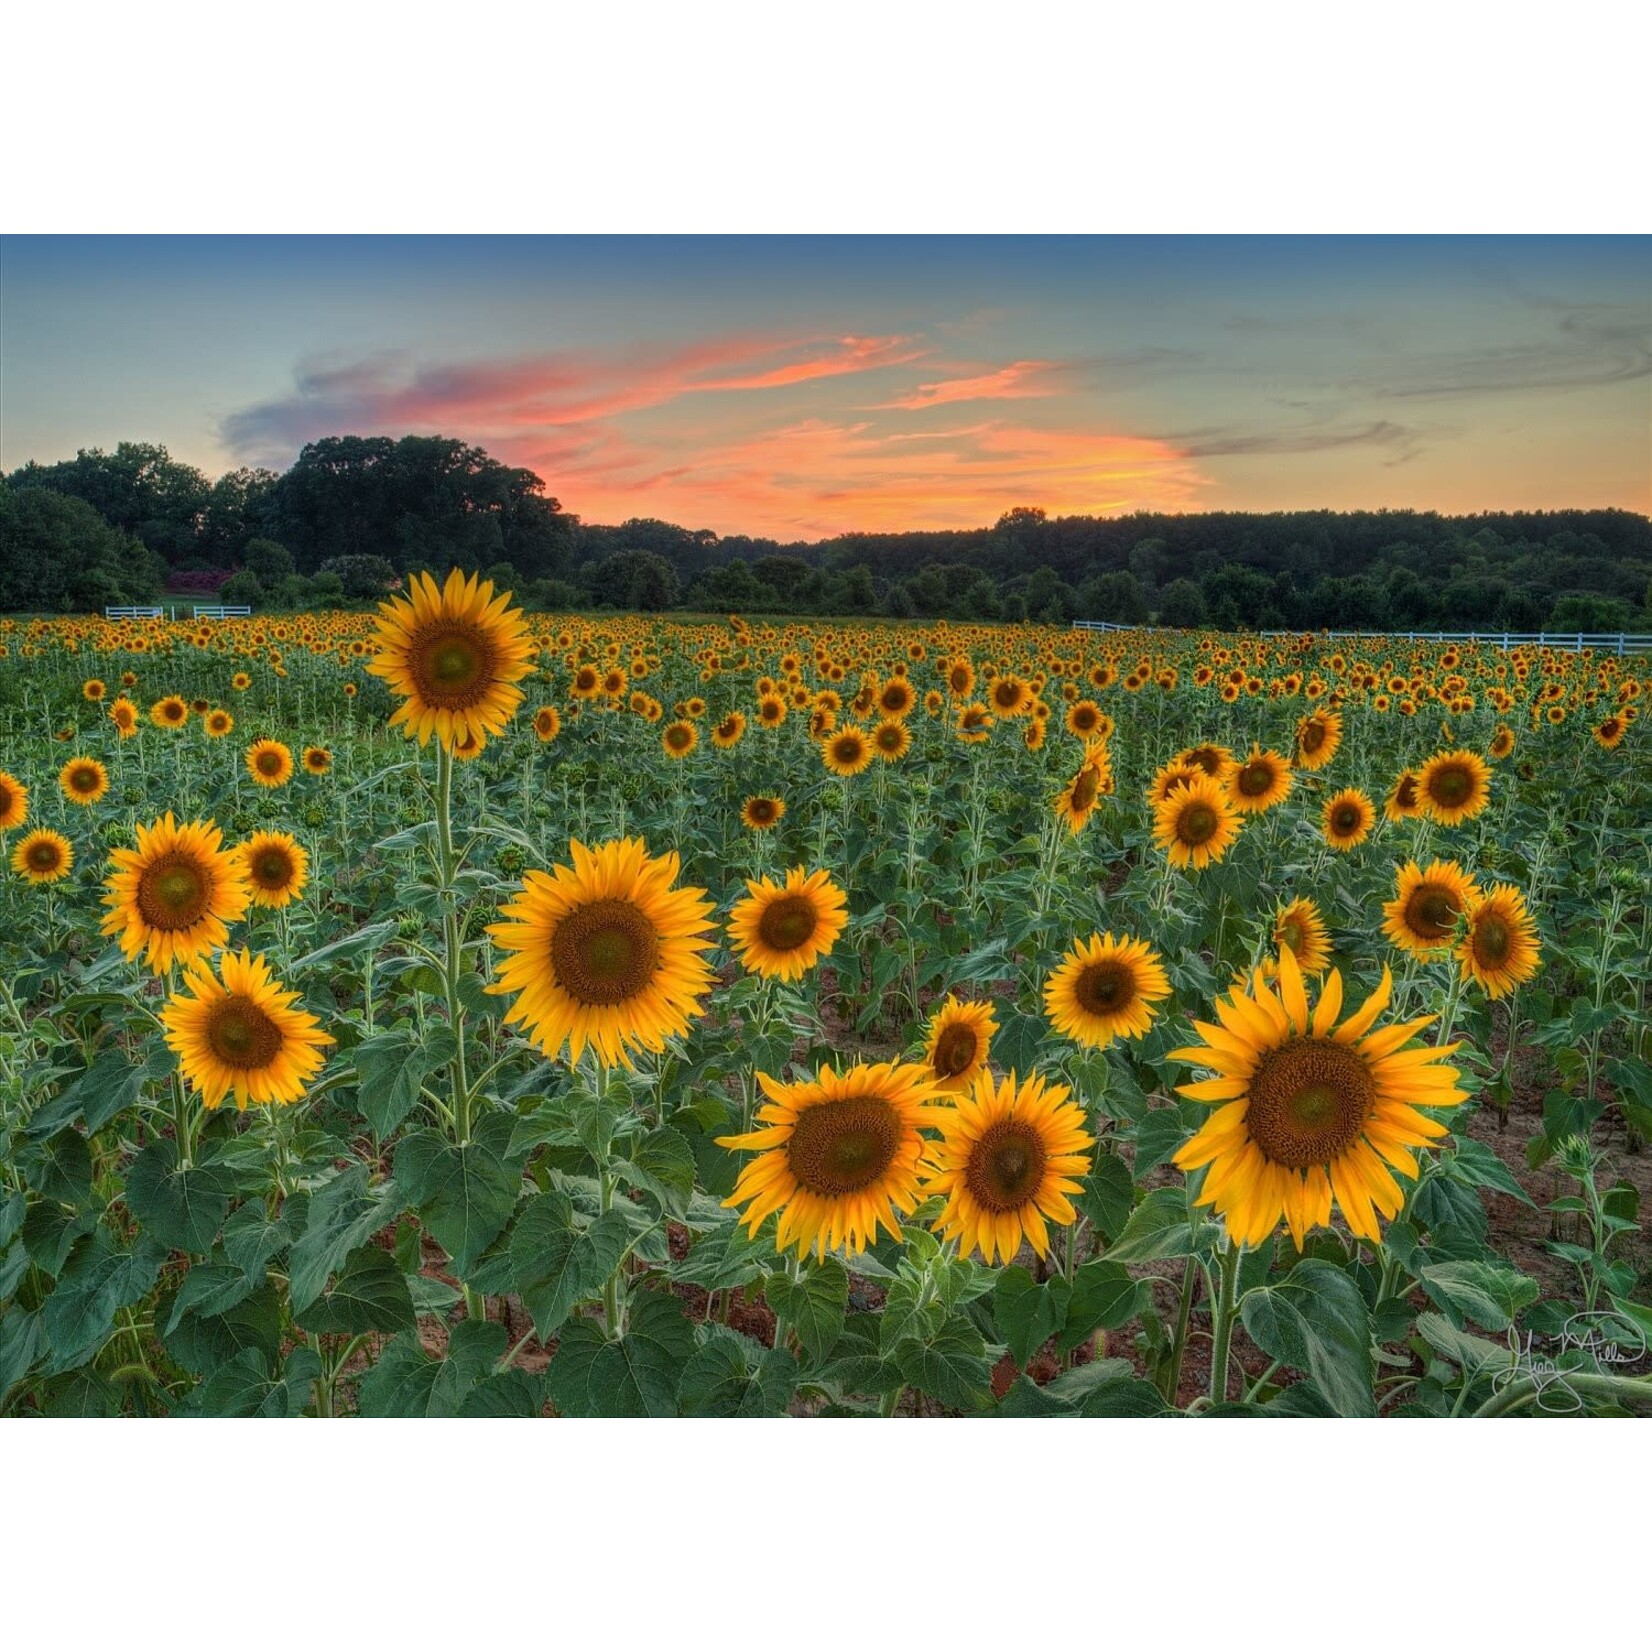 The image mill "Sunflower Sunset"